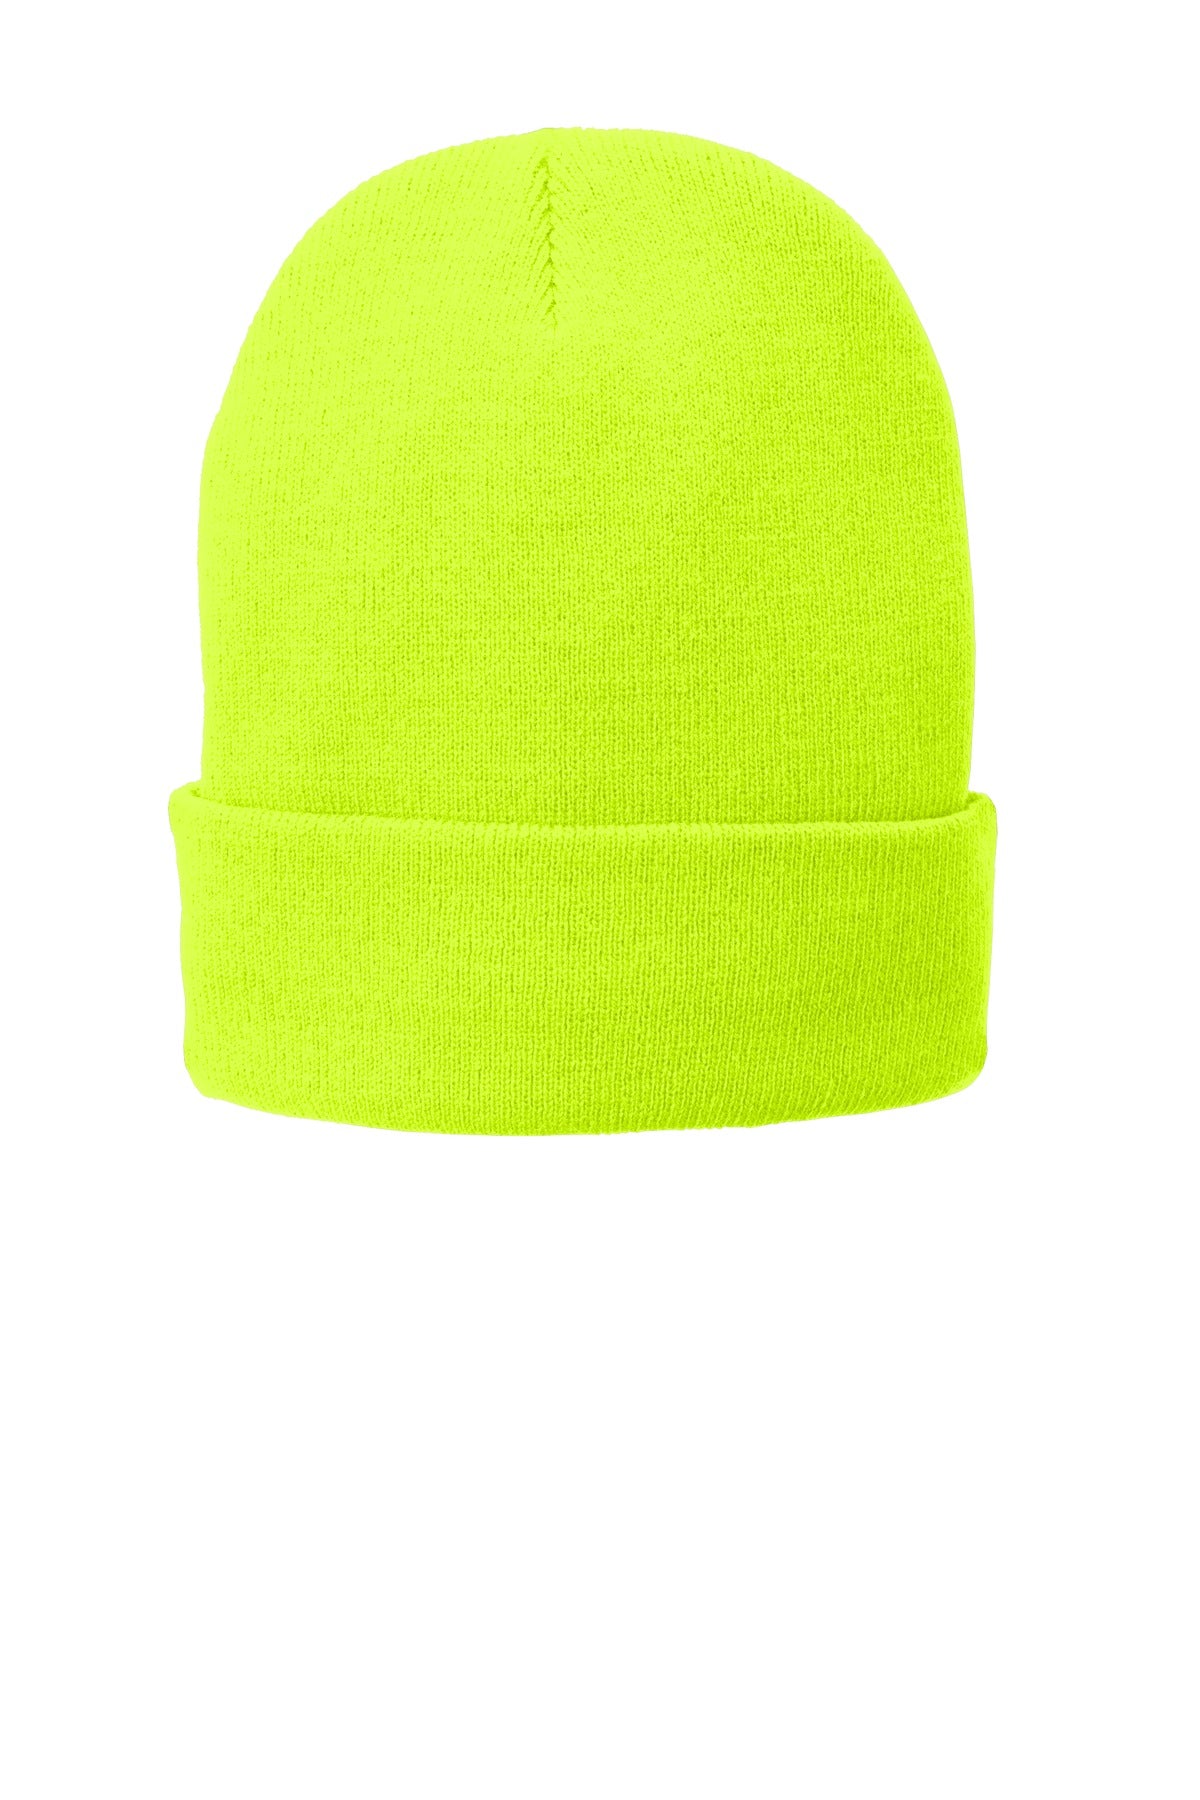 Port & Company Fleece-Lined Knit Cap. CP90L